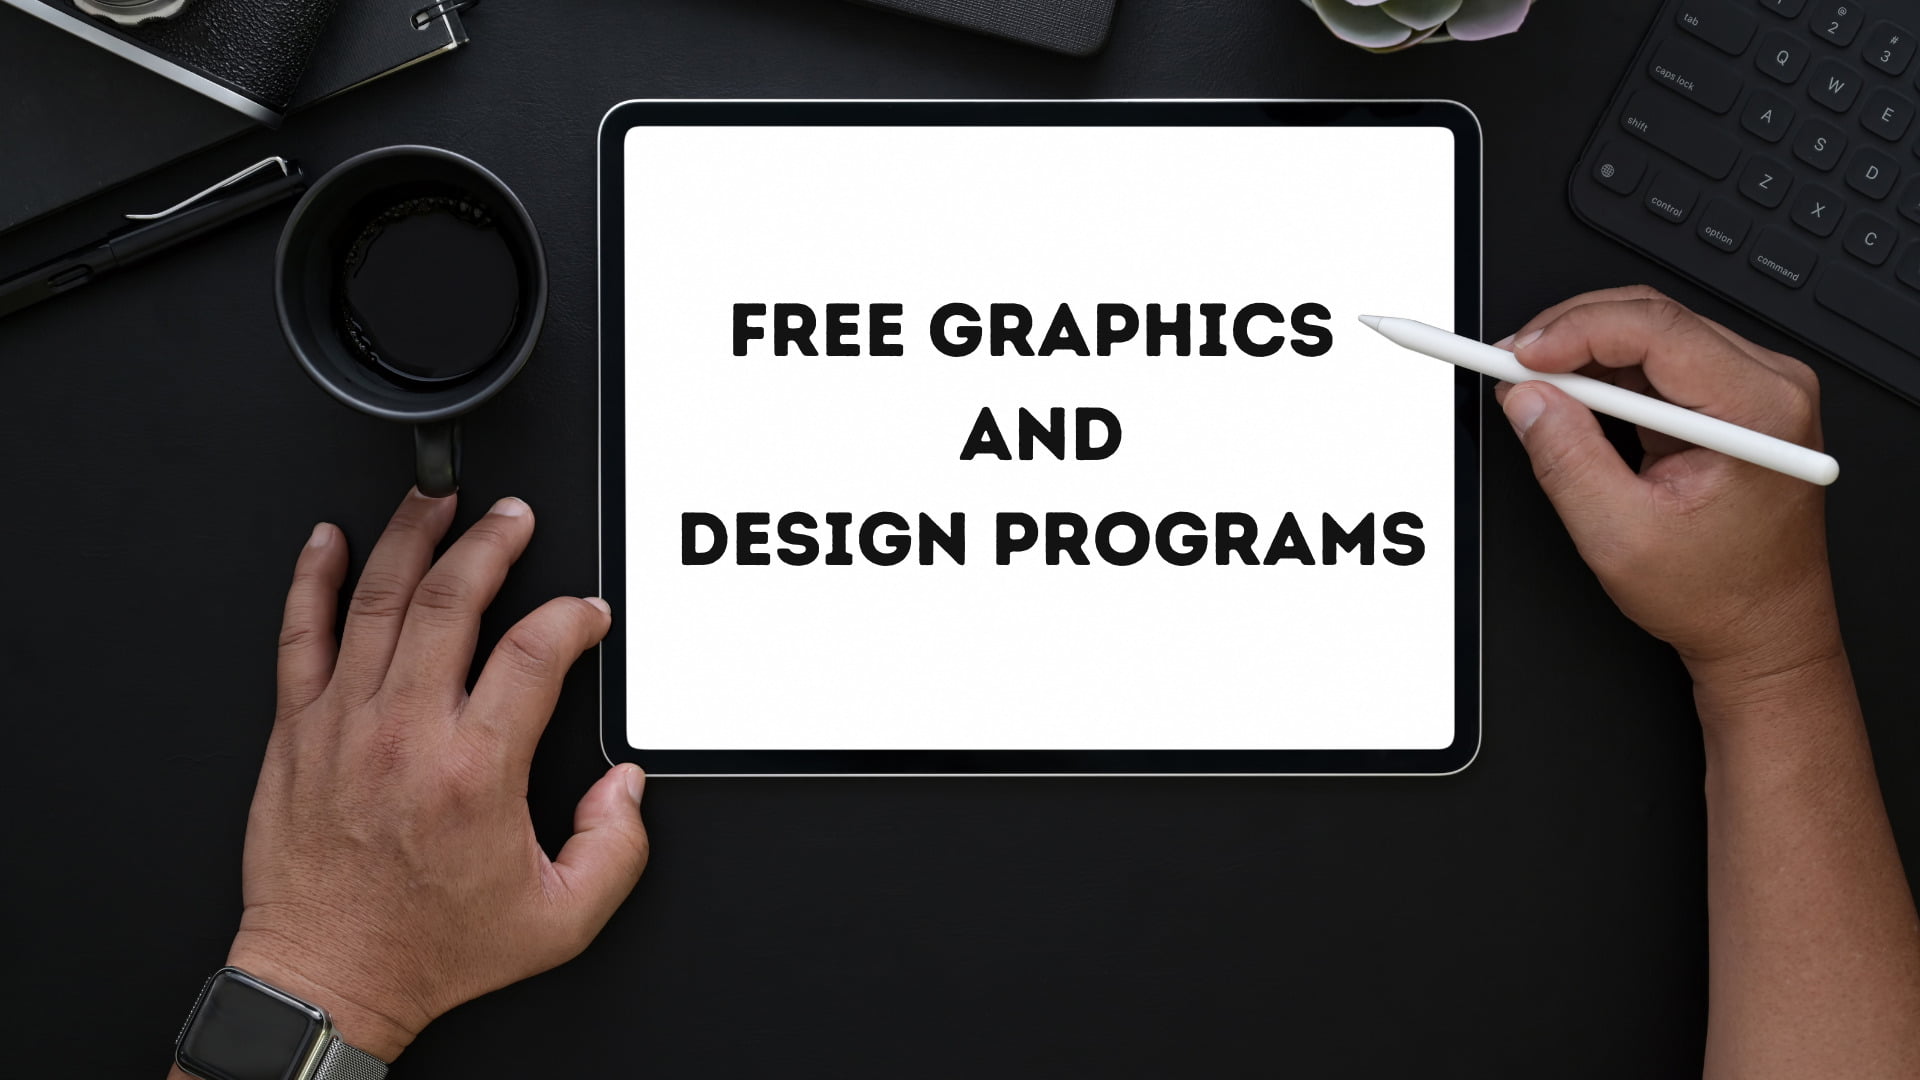 Free graphics and design programs